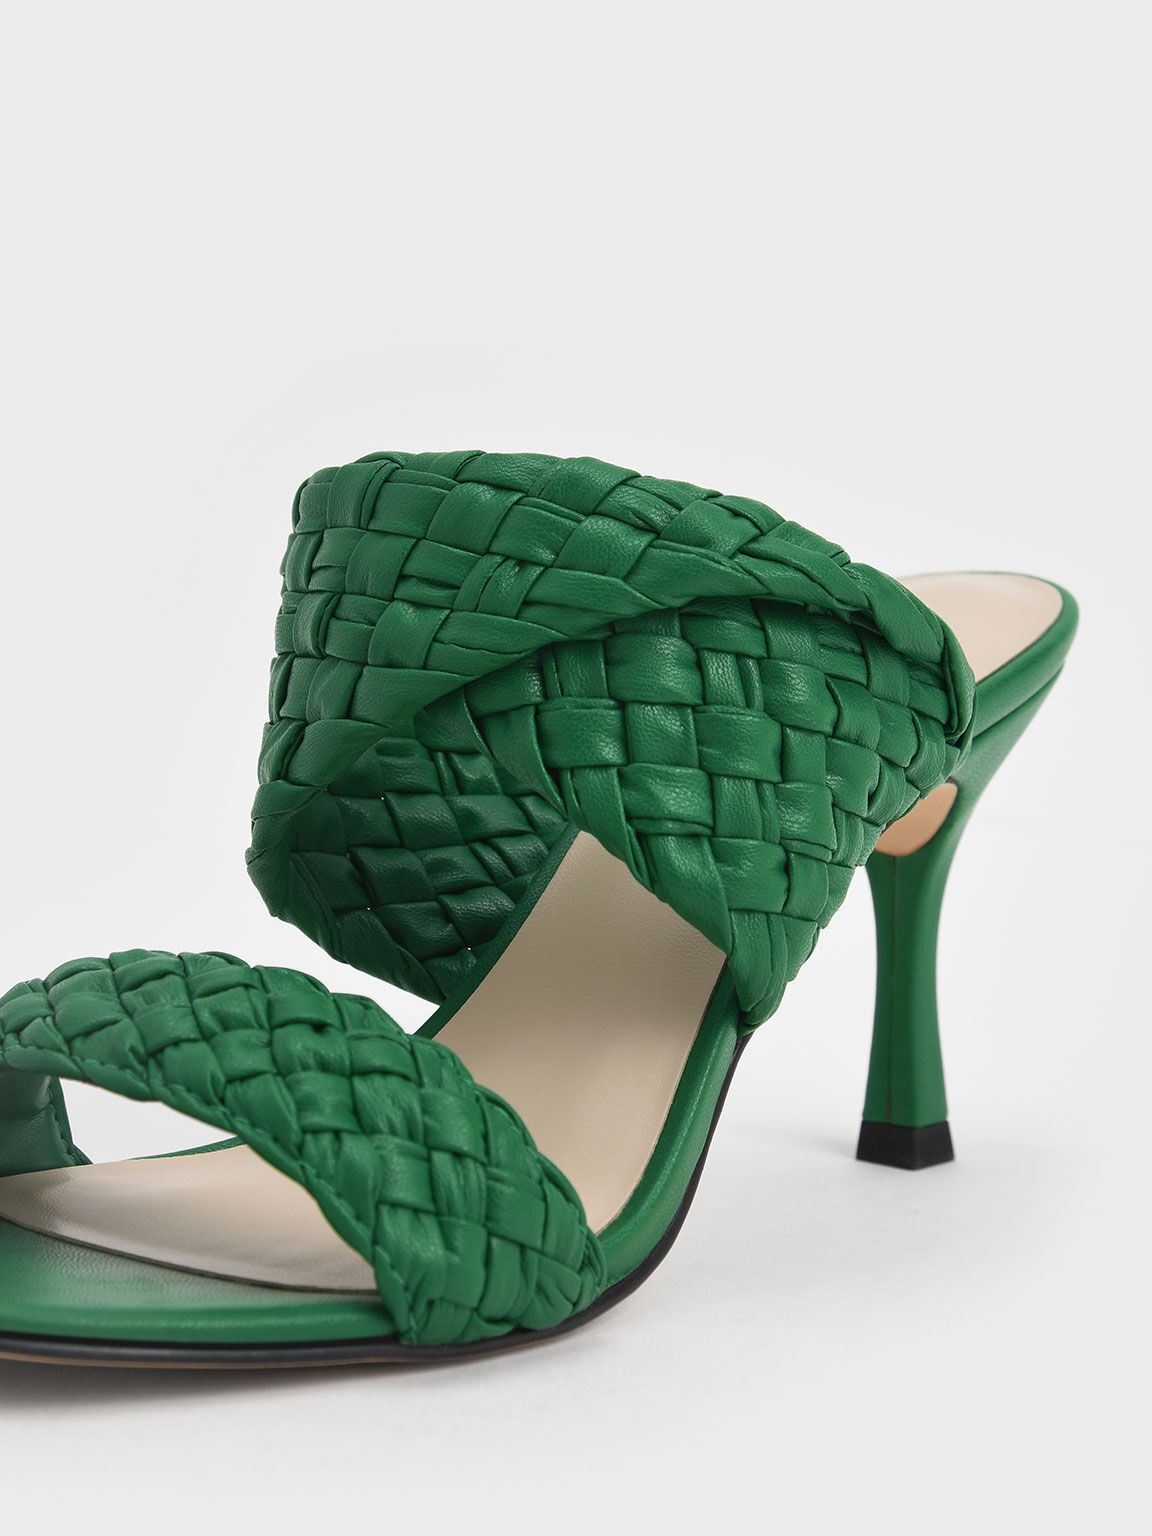 Nasty Gal Snakeskin Heels for Women | Mercari